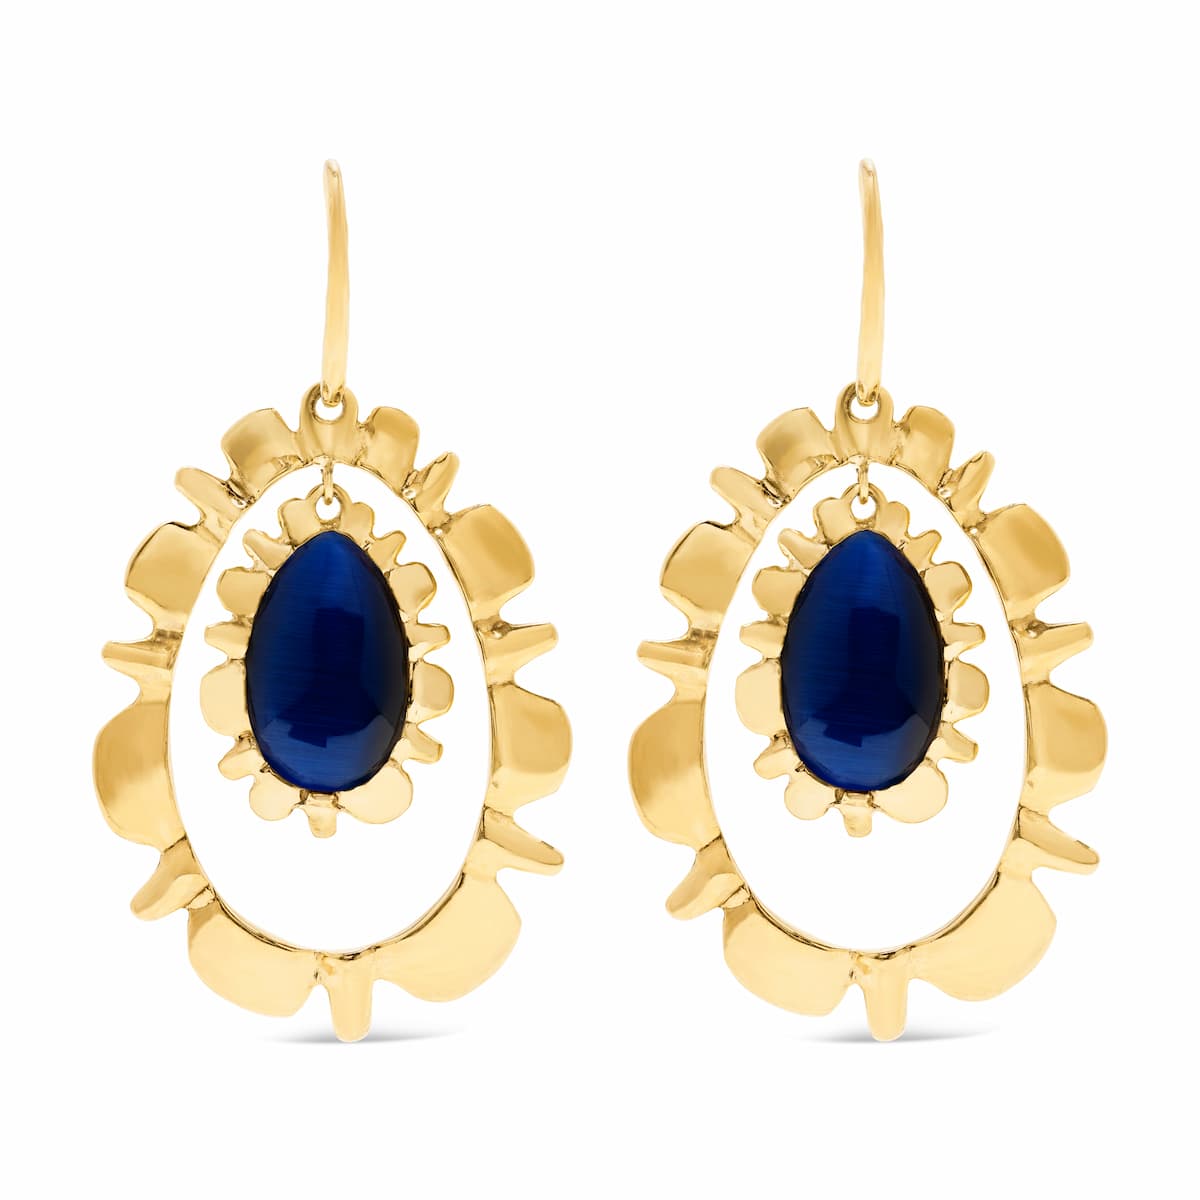 Gold floating drop earrings with dark blue labradorite.